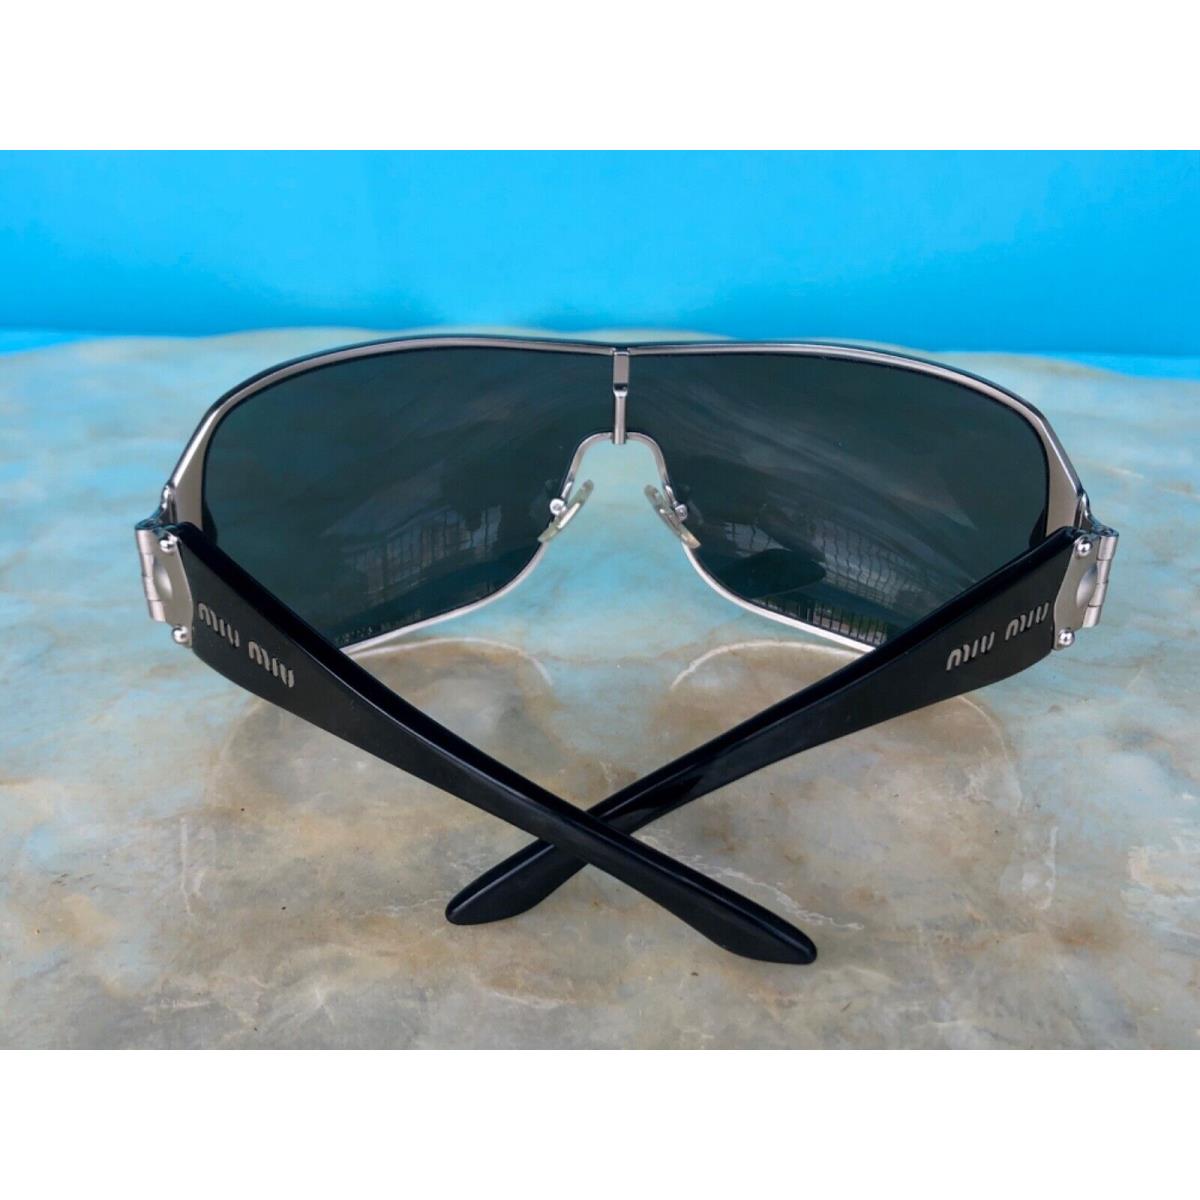 Miu Miu sunglasses  - SILVER with BLACK ARMS Frame 7